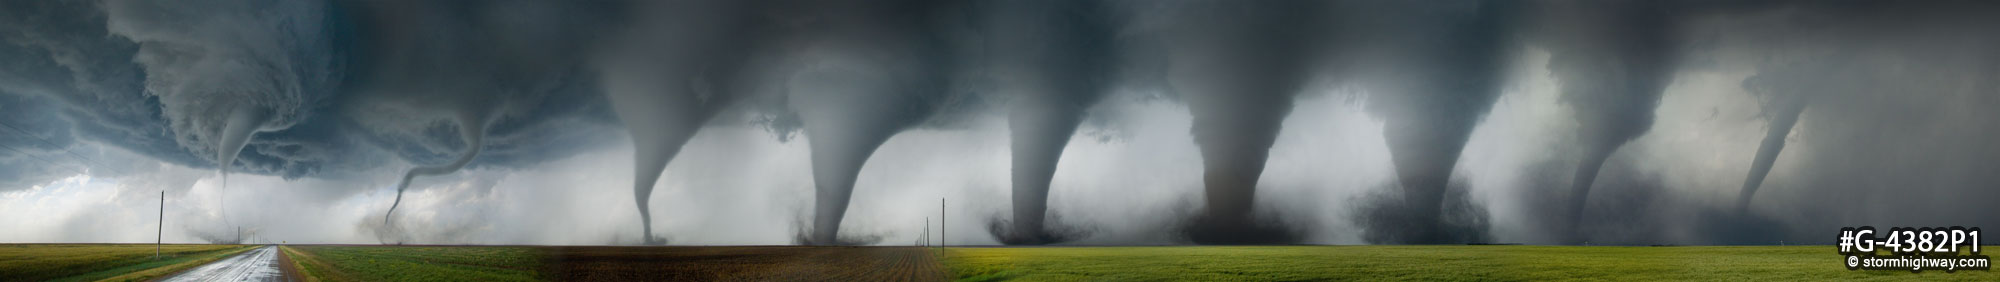 Tornado life cycle panorama 1